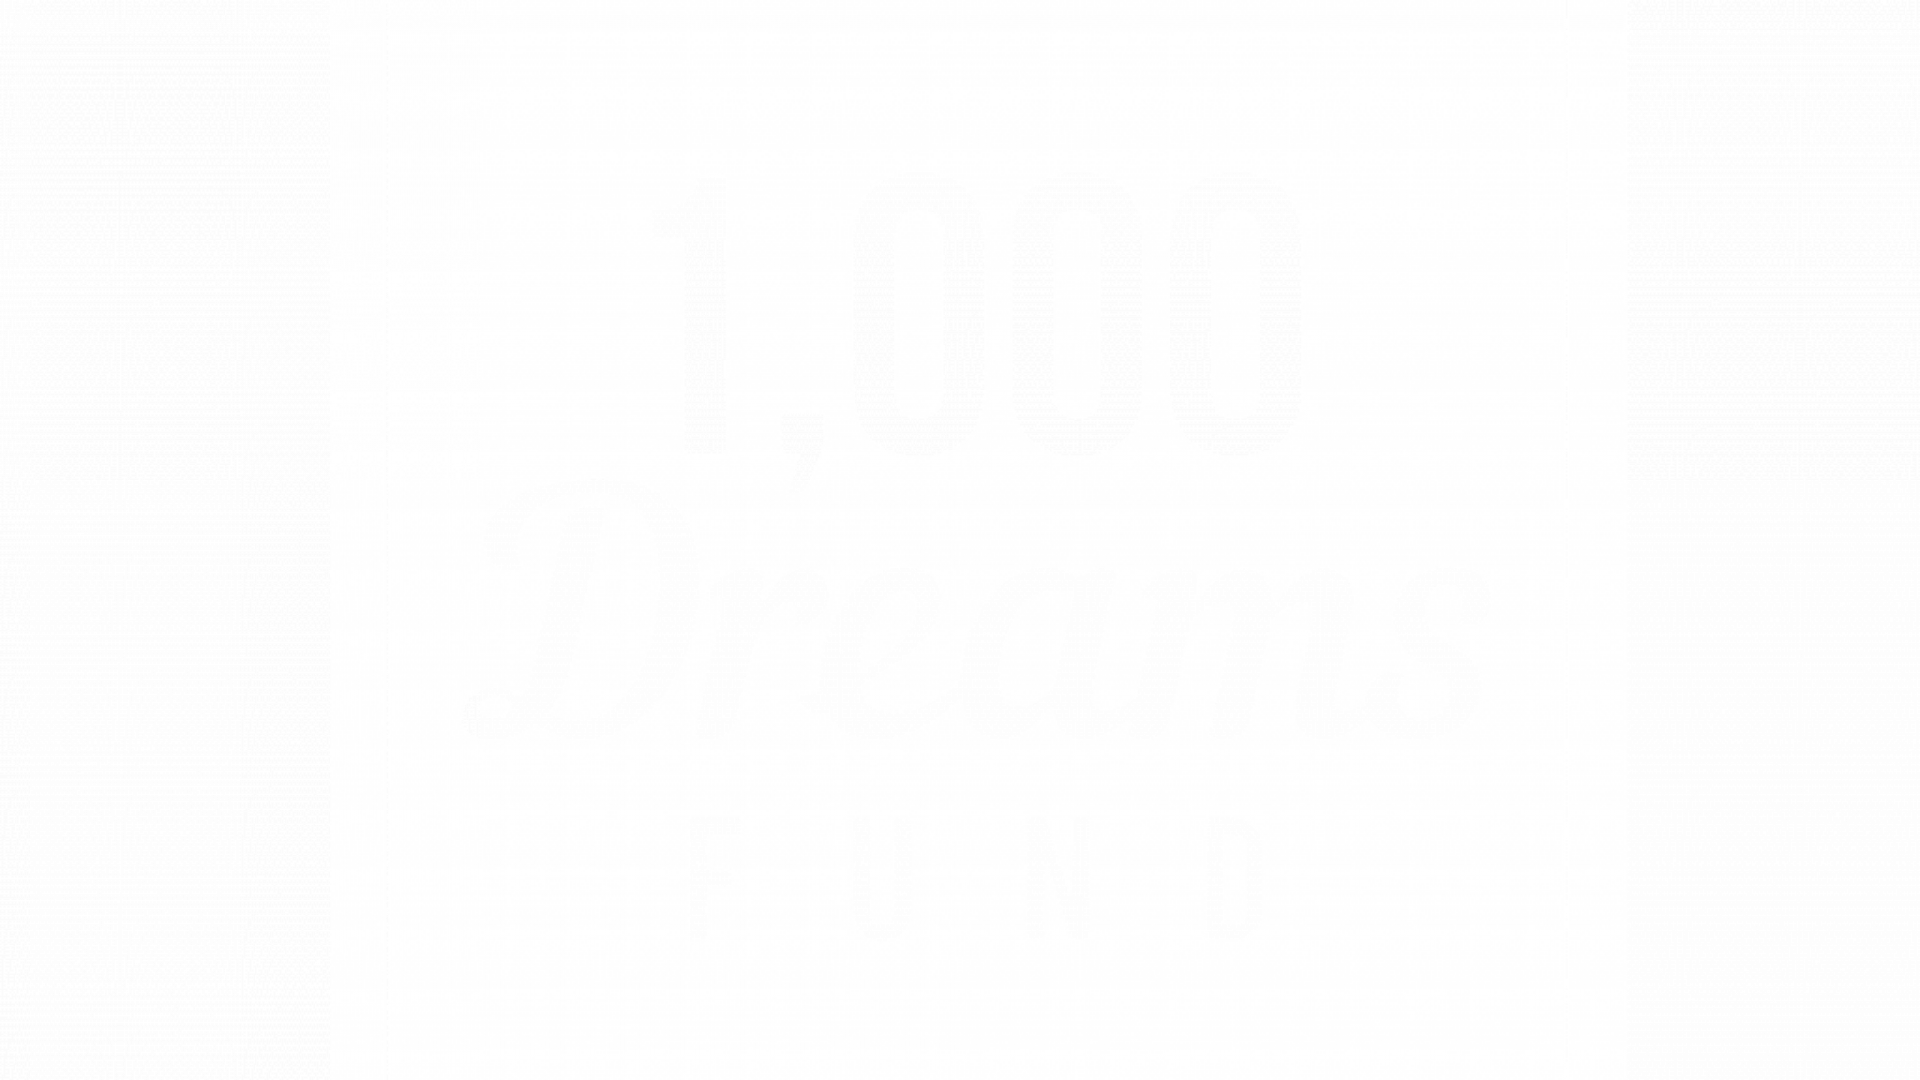 web charity logos - all white_1000dreams